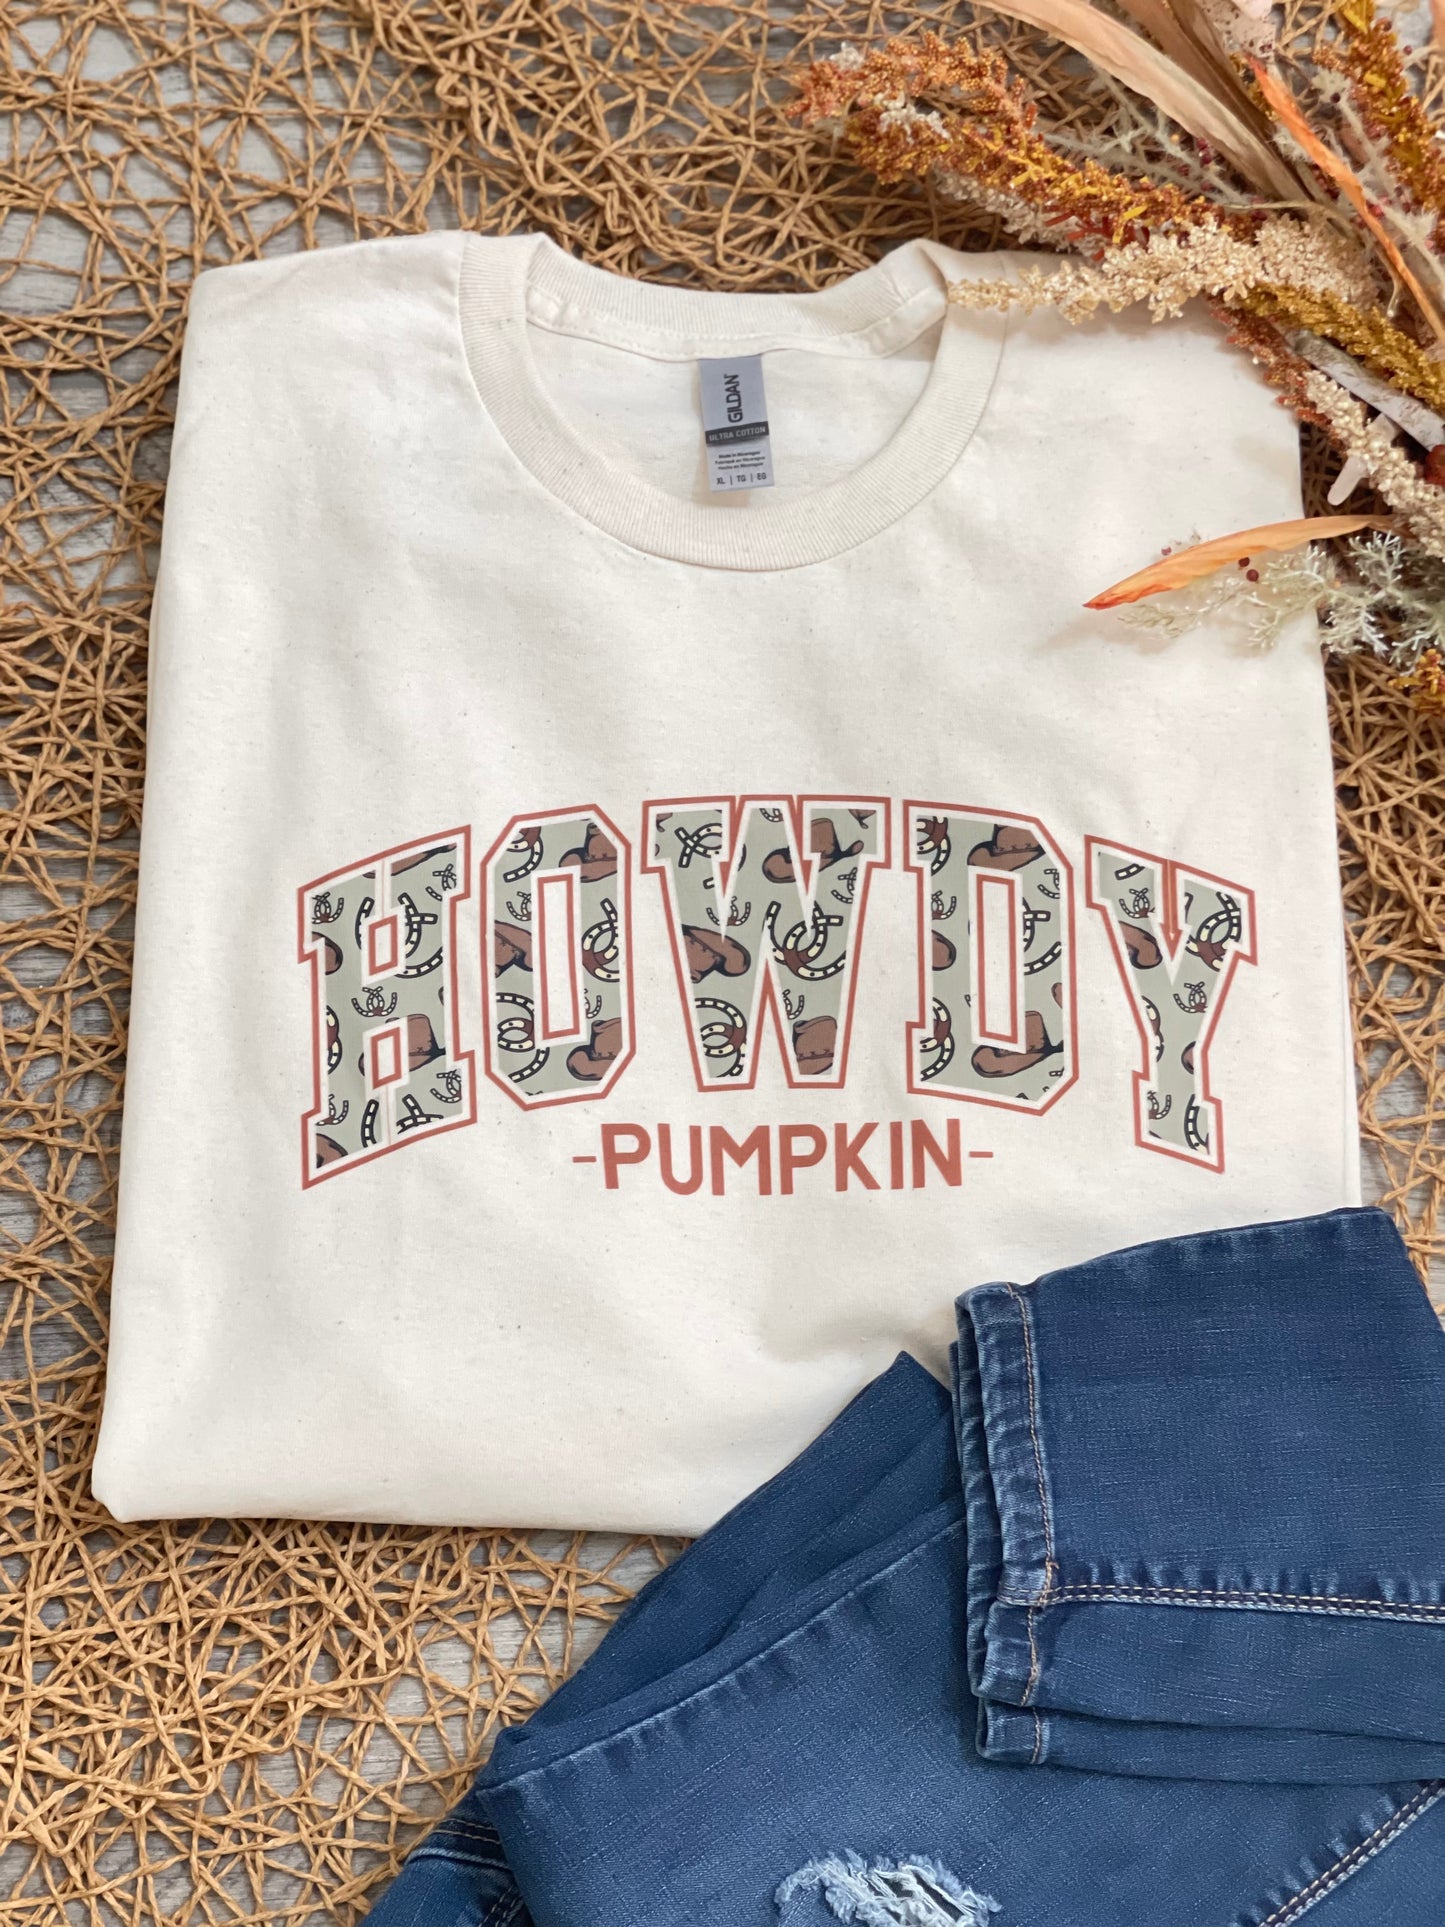 Howdy Pumpkin -Tee